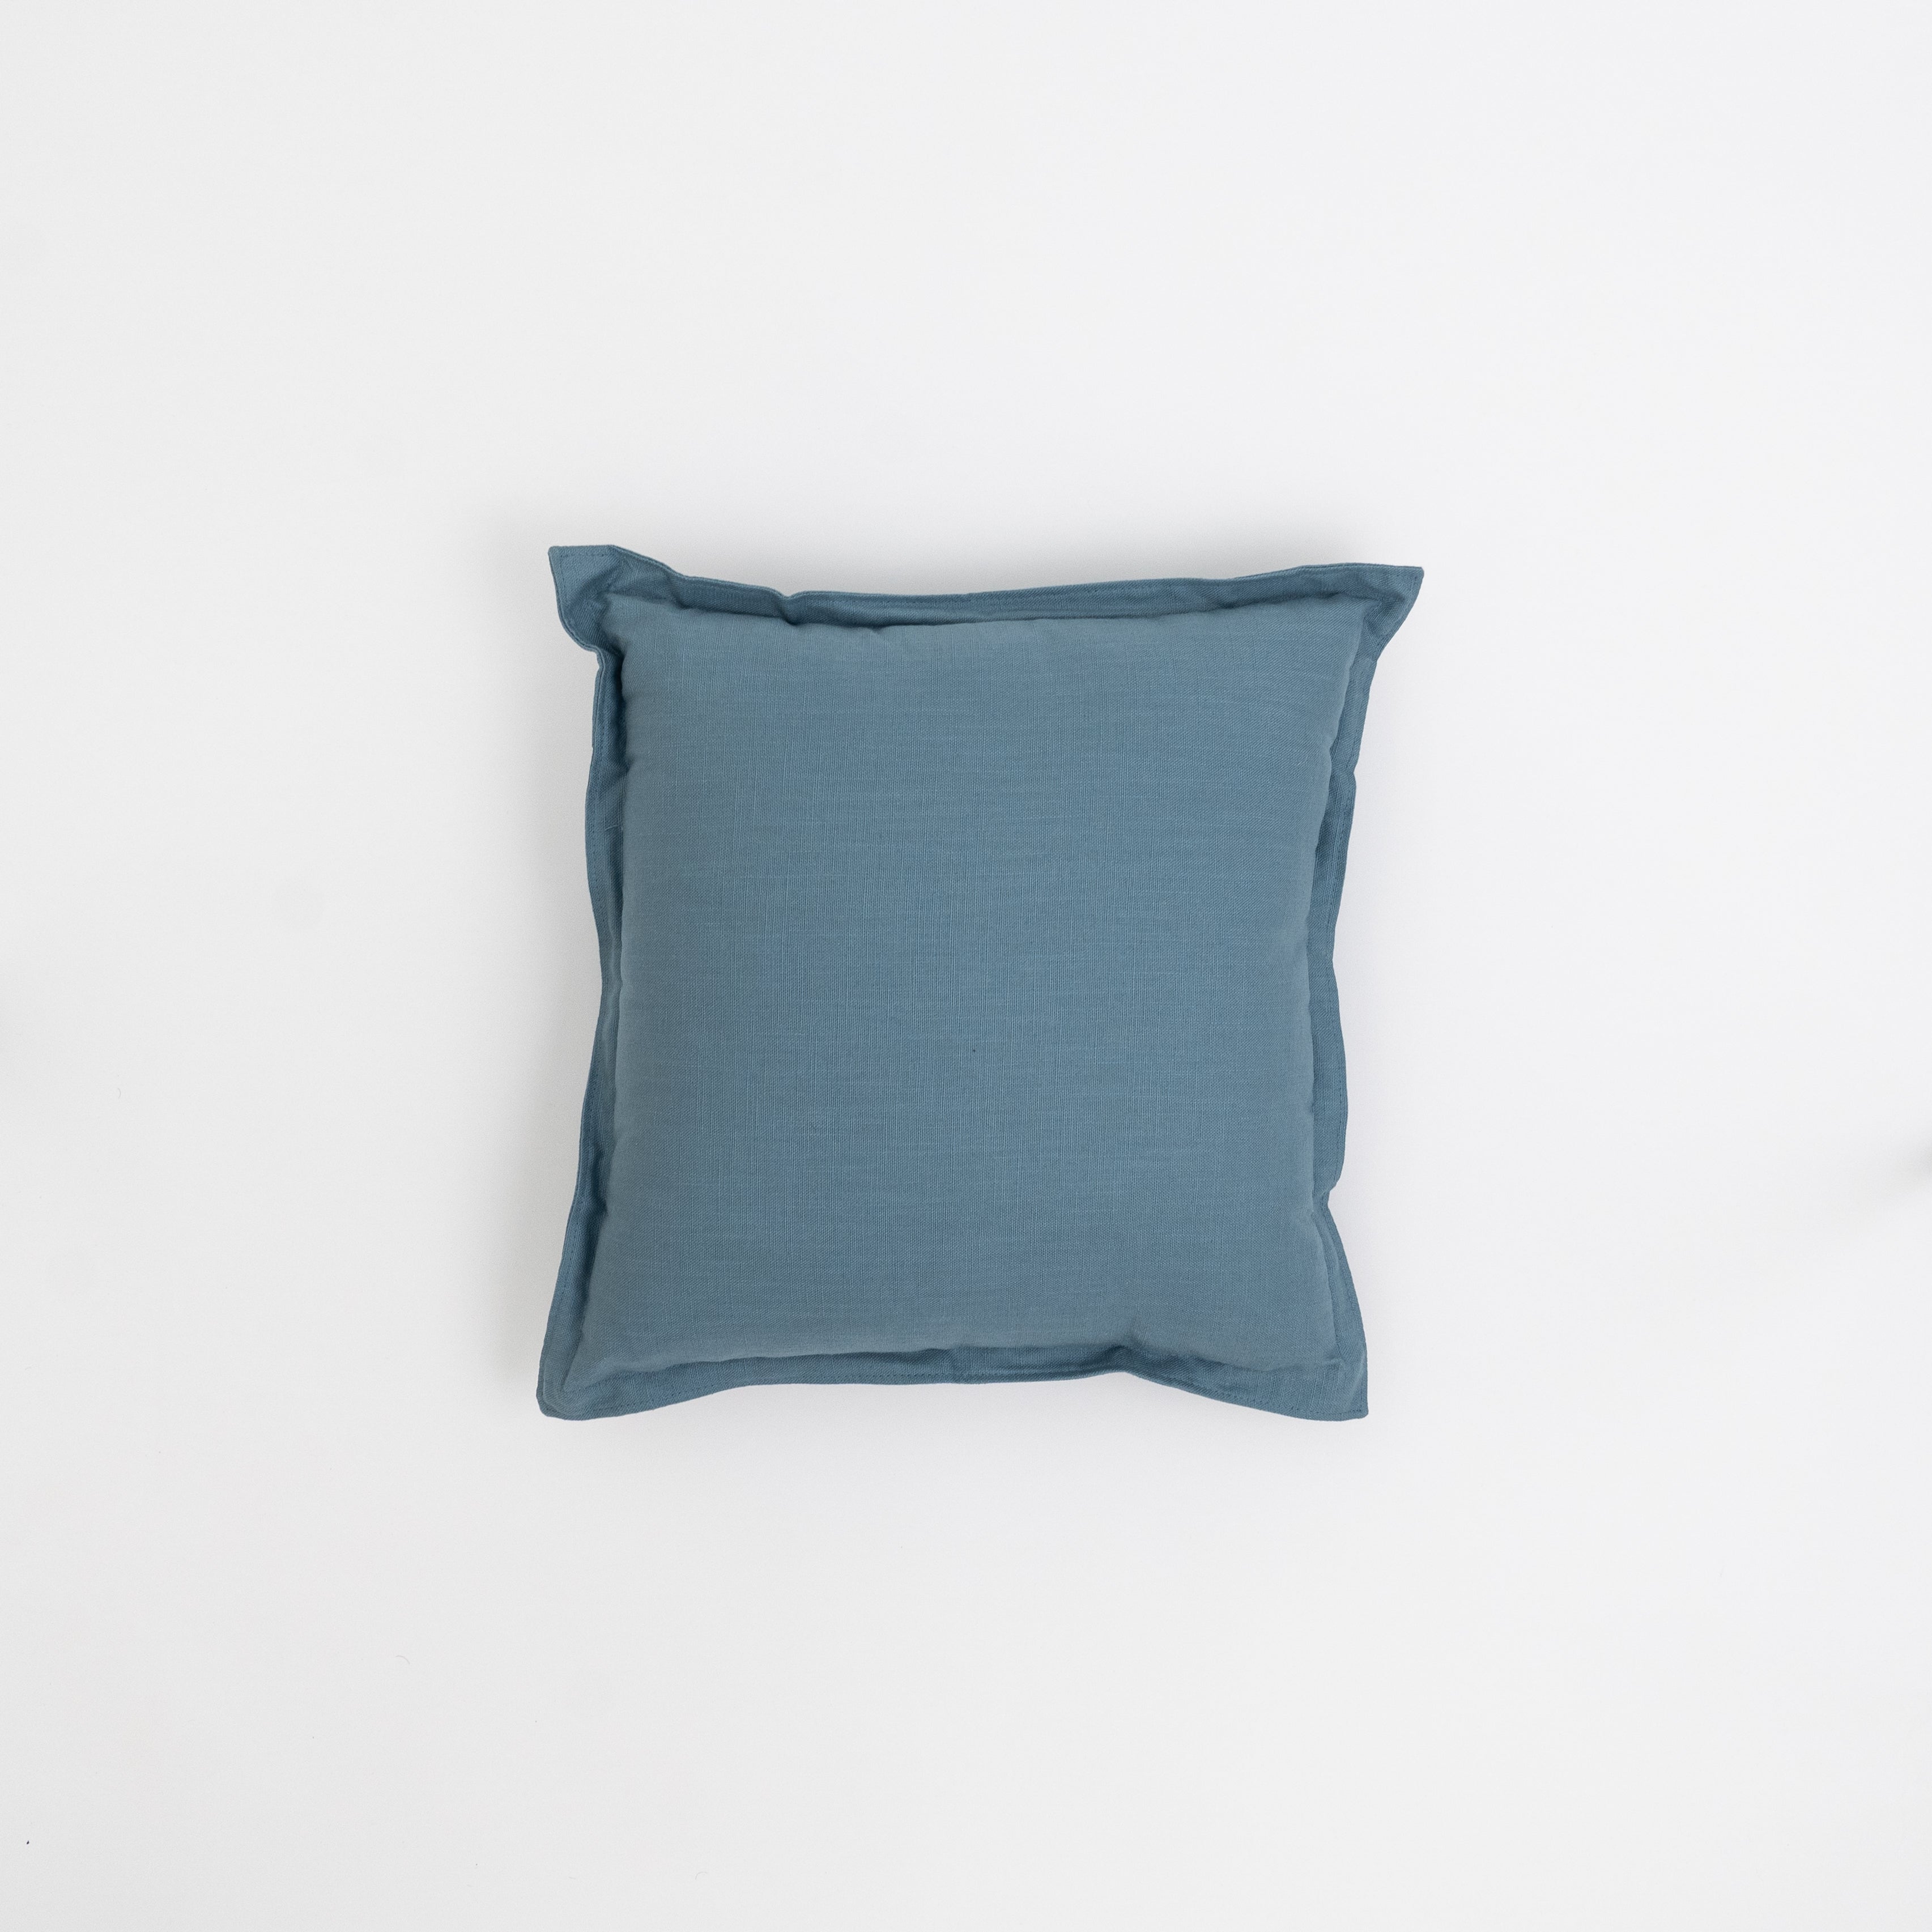 Cushion Cover 45x45cm  - WS Living - UAE - Cushions Wood and steel Furnitures - Dubai